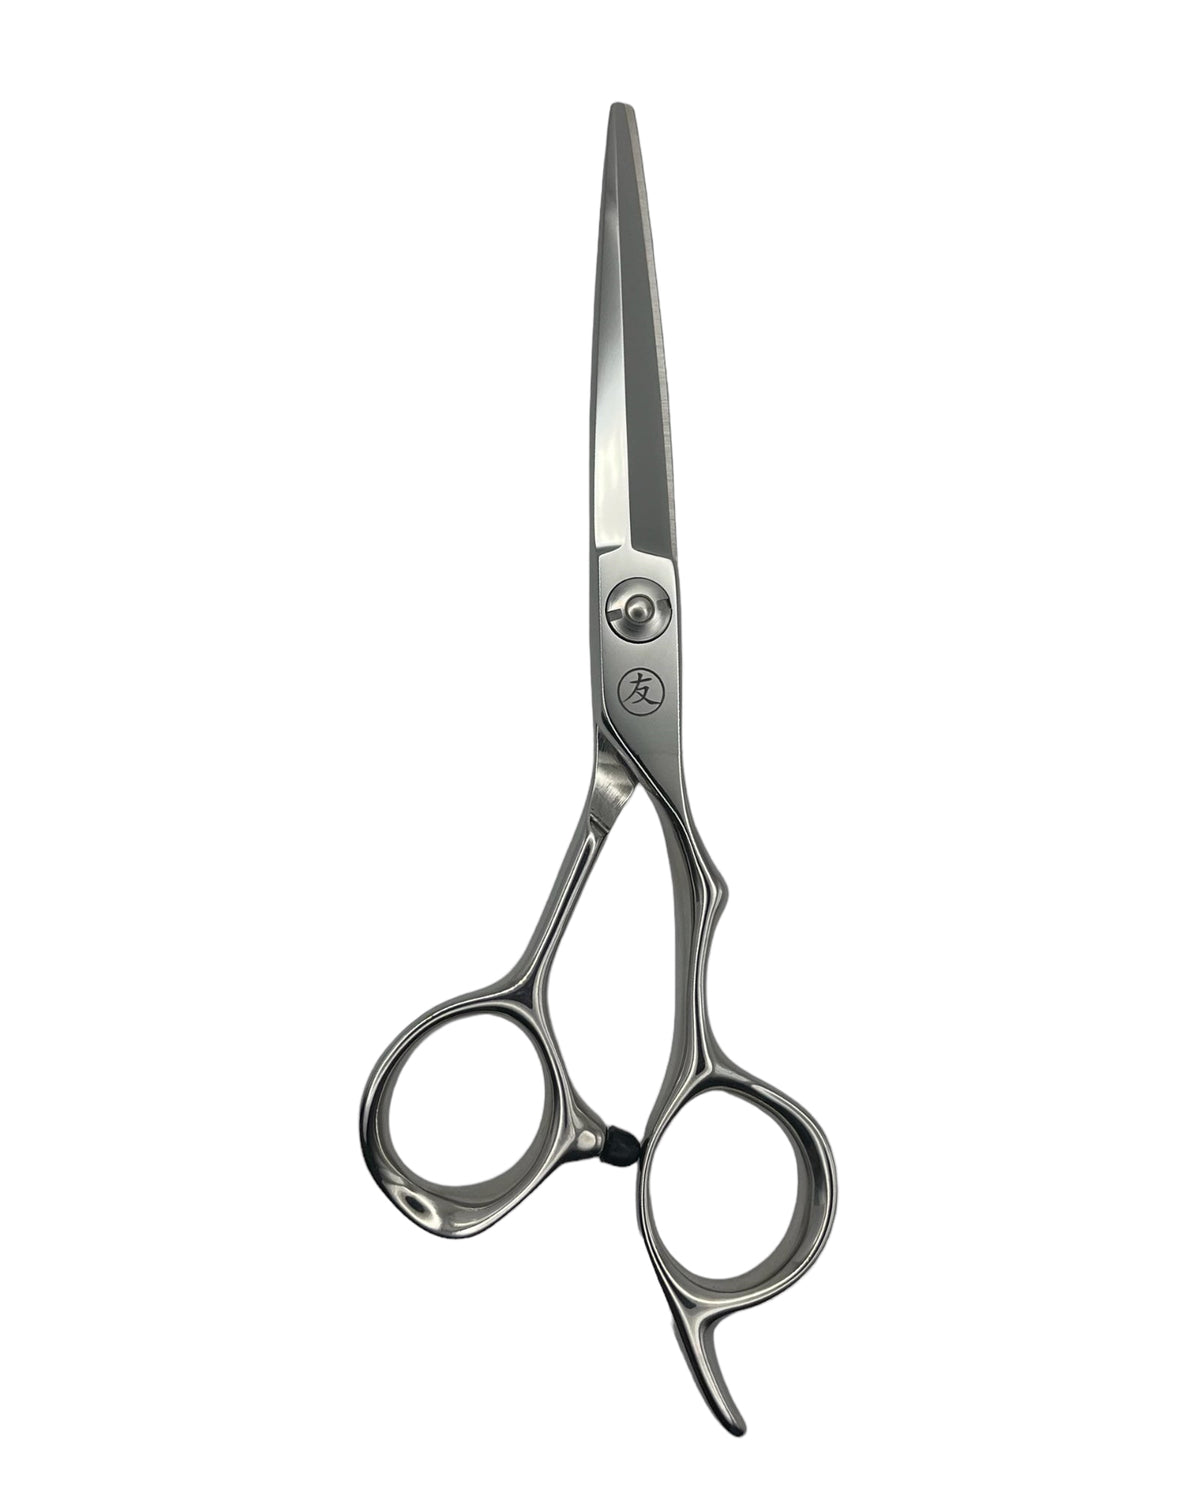 AK Z-1 Master Hairdressing Scissors in 5.5 inch